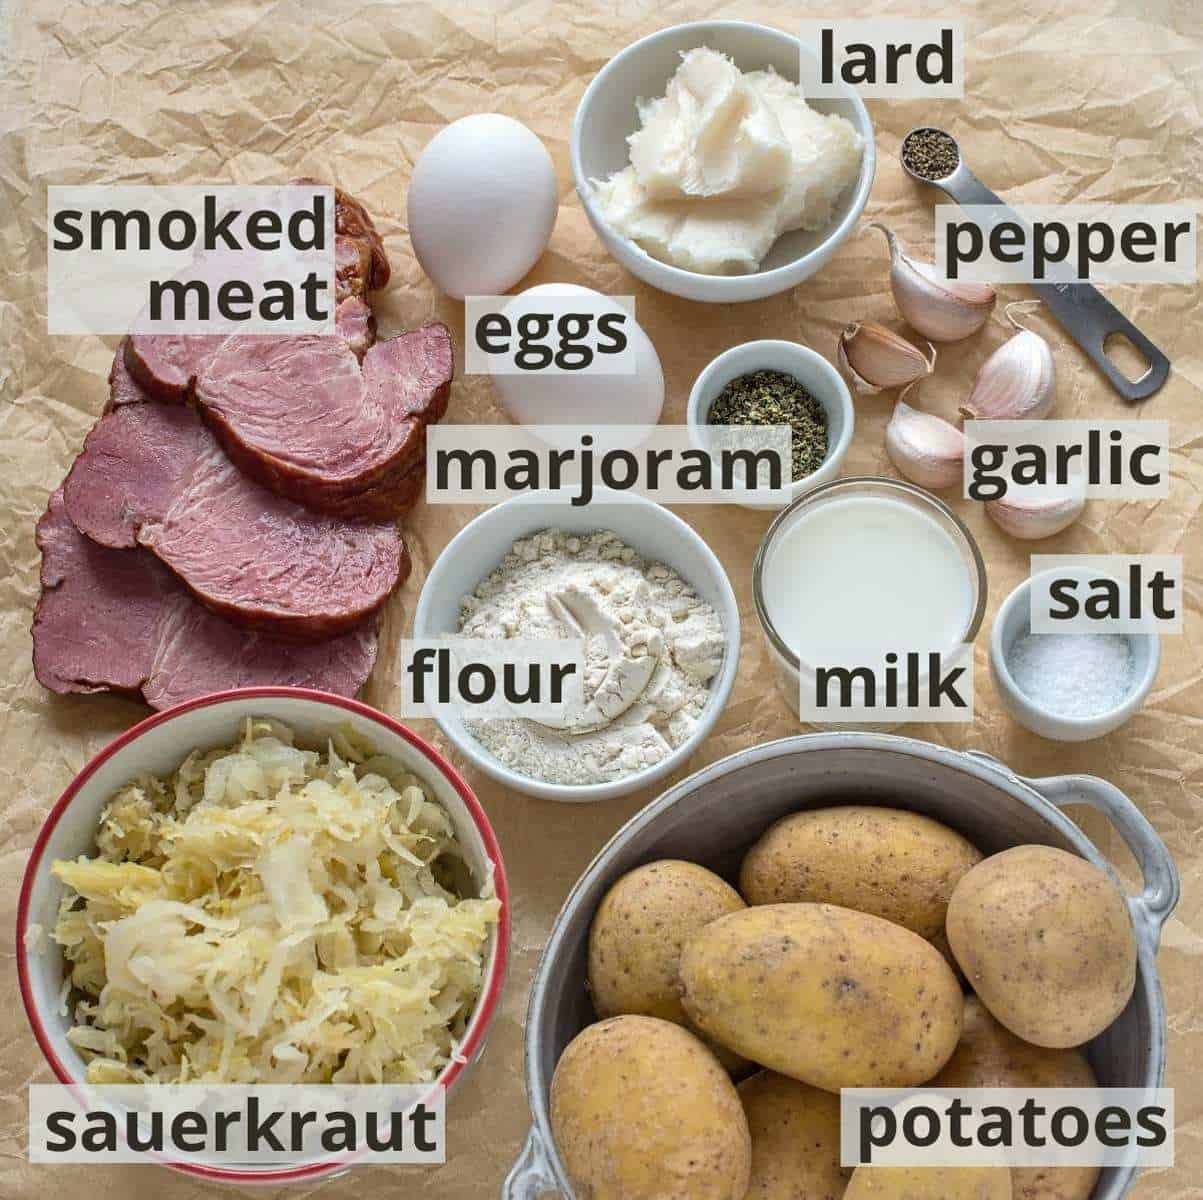 Czech recipe cmunda po kaplicku, view of ingredients needed to make the dish, inclusive captions.